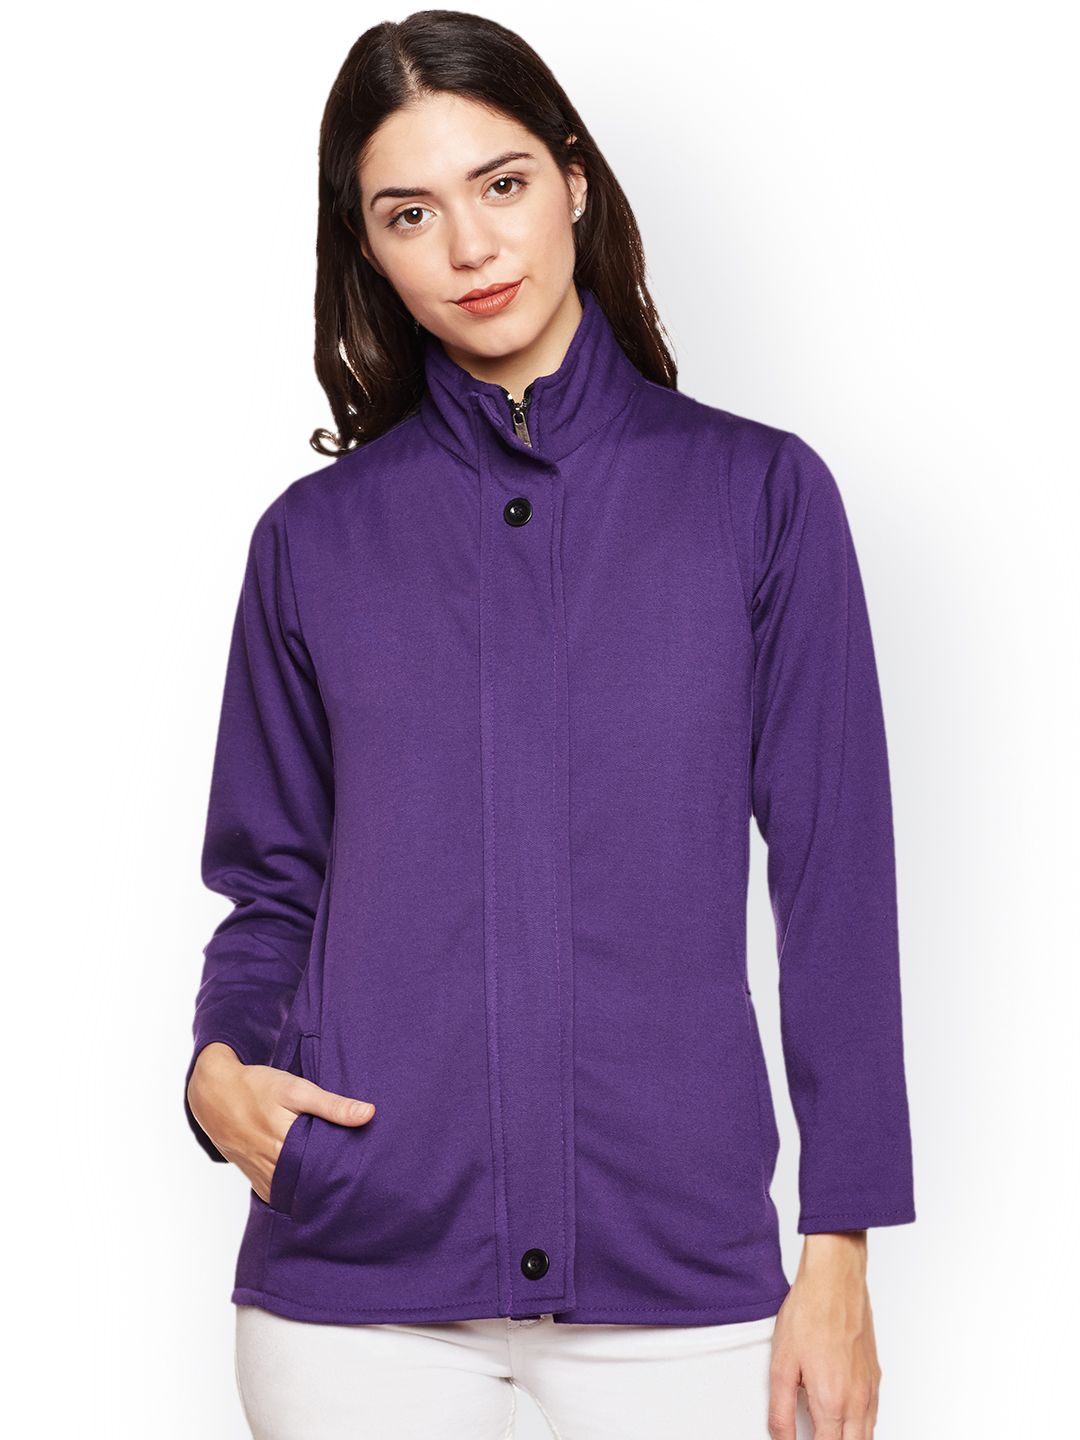 Belle Fille Women Purple Solid Lightweight Open Front Jacket Price in India